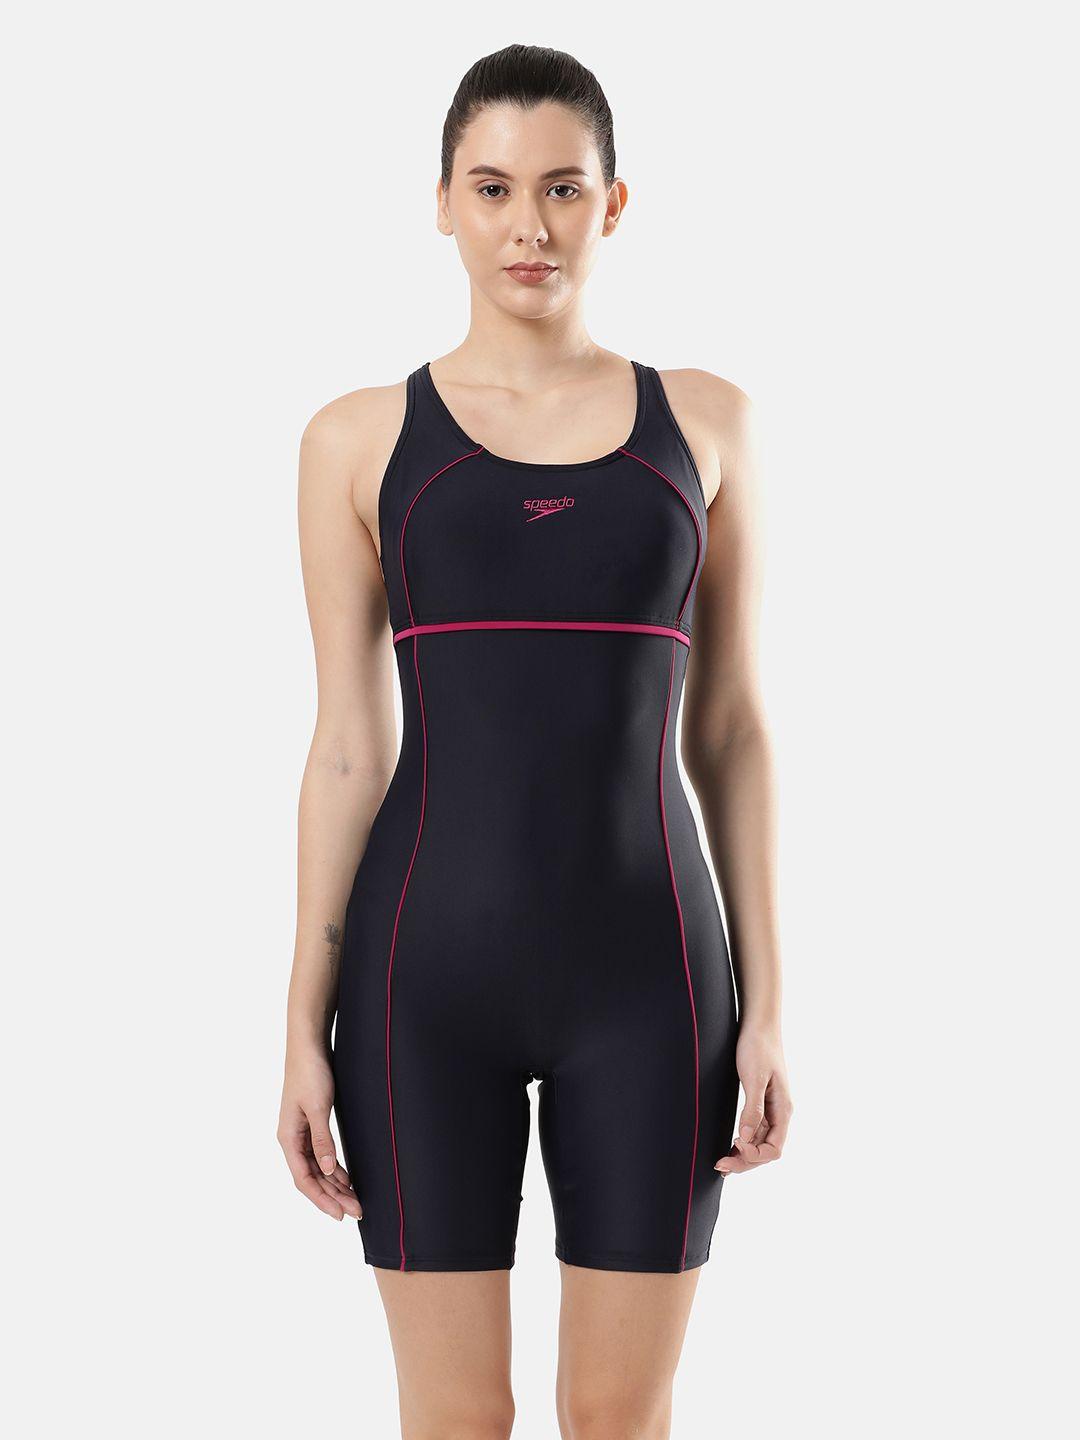 speedo women swimwear bodysuit